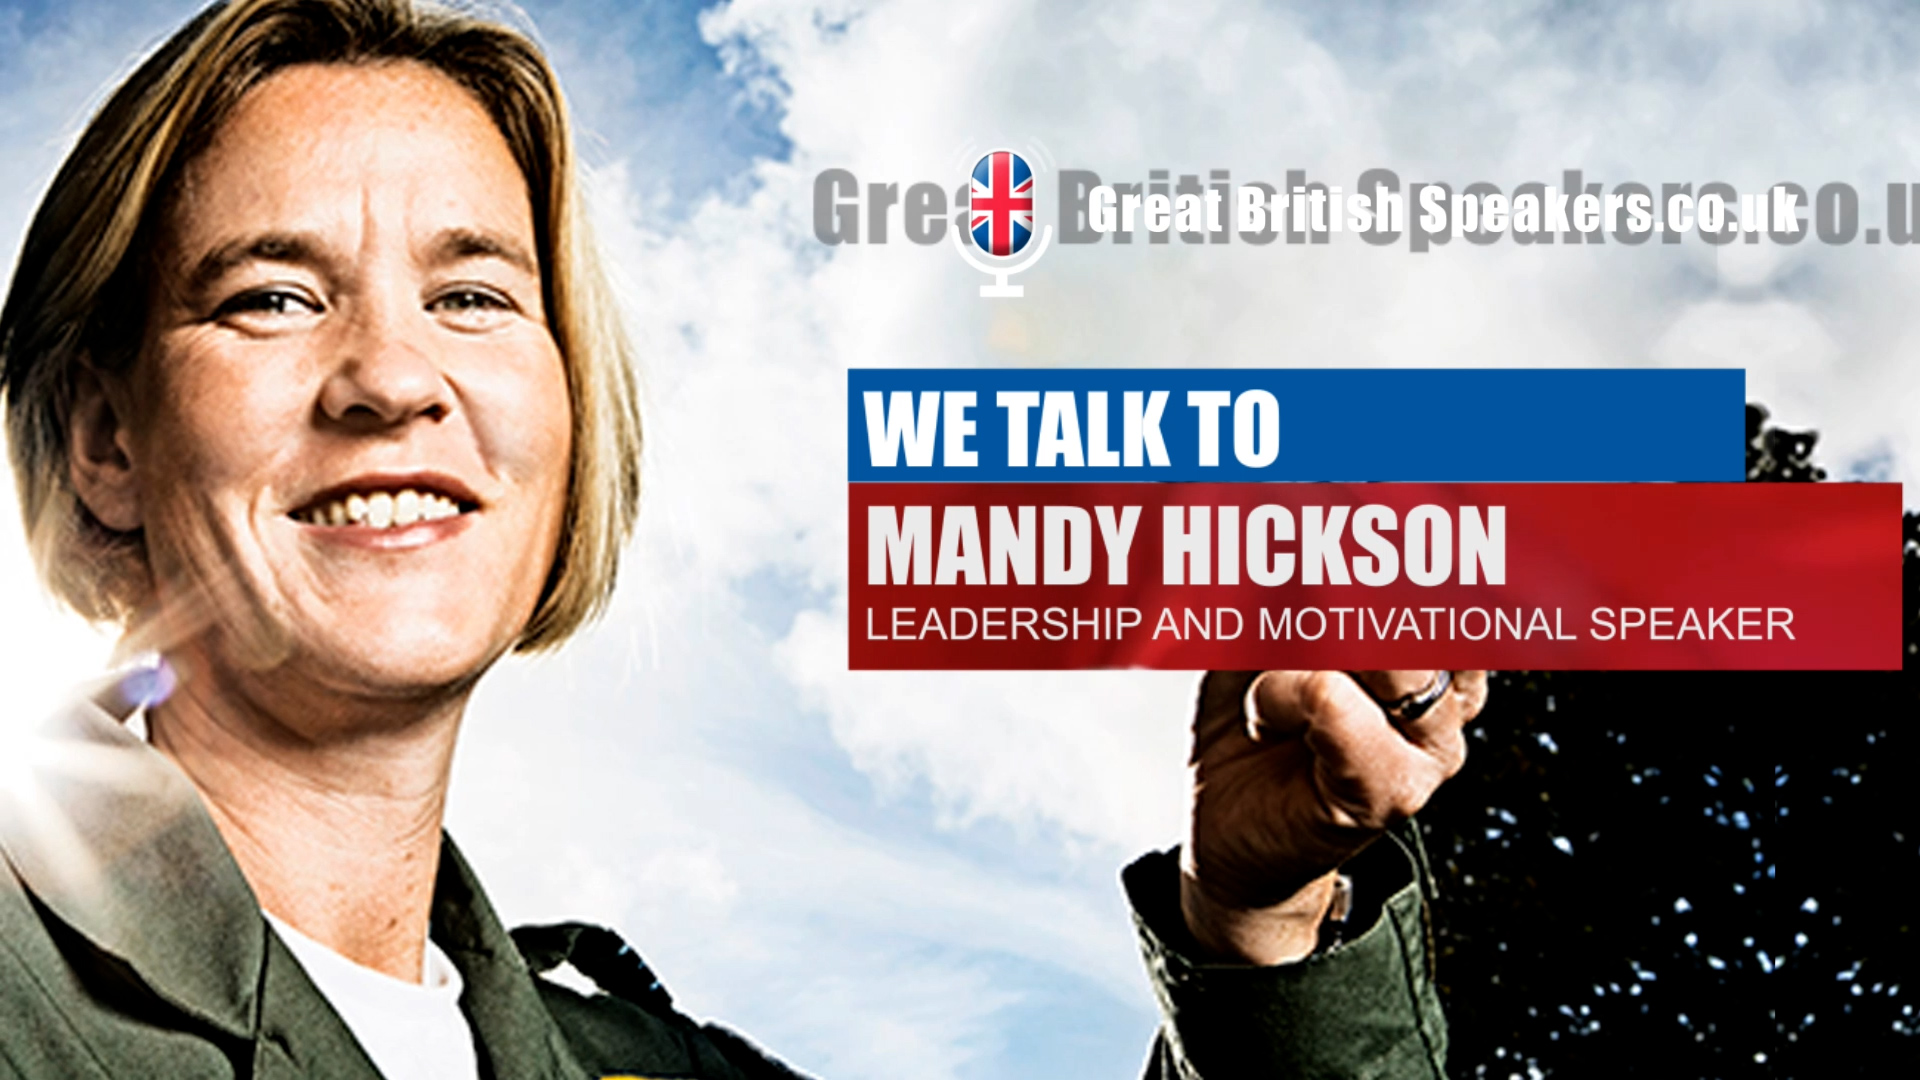 Mandy Hickson, pilot speaker at Great British Speakers